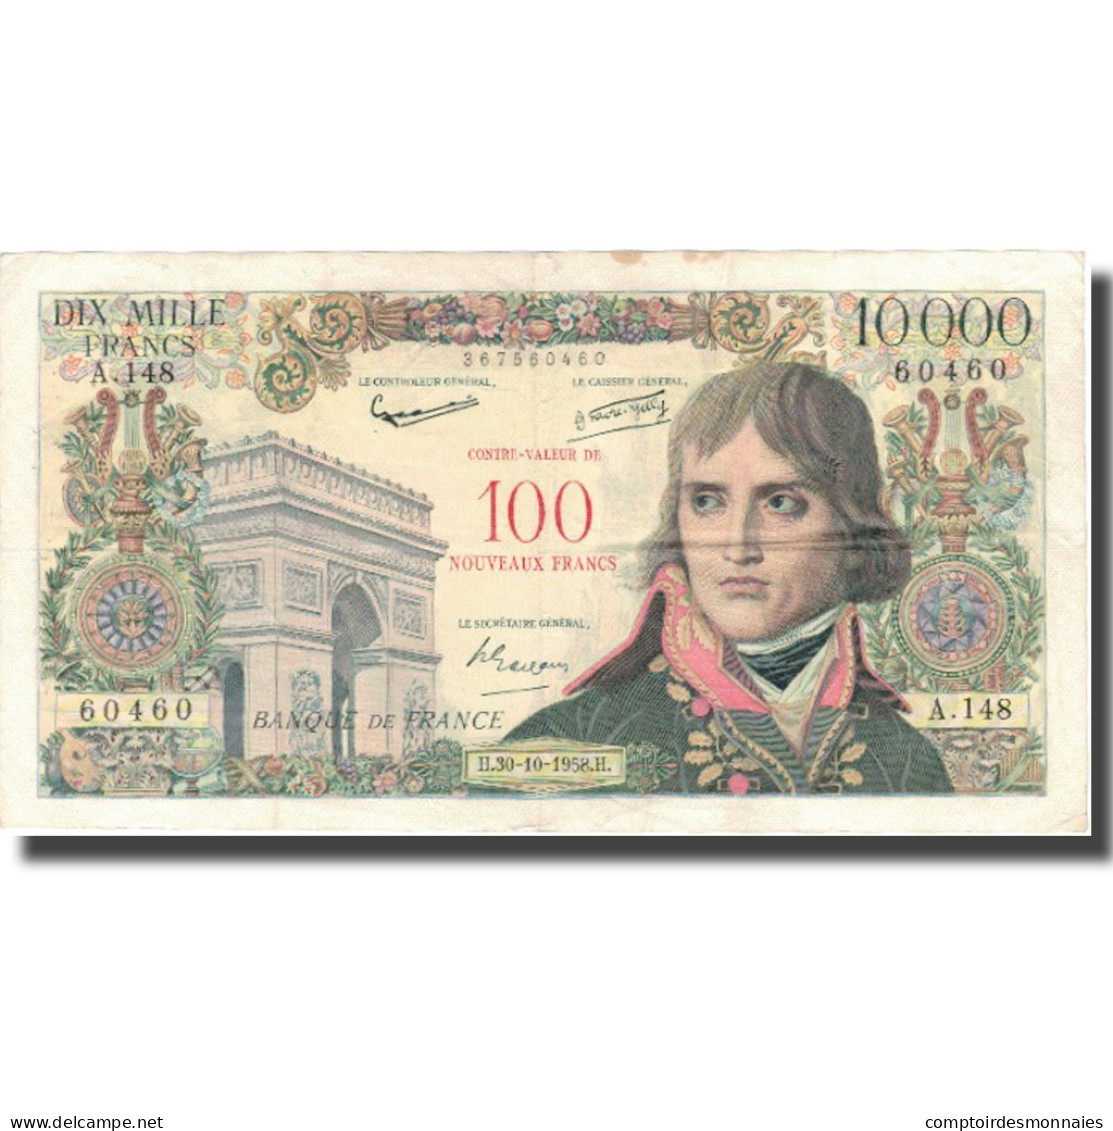 France, 100 Nouveaux Francs On 10,000 Francs, 1955-1959 Overprinted With - 1955-1959 Overprinted With ''Nouveaux Francs''